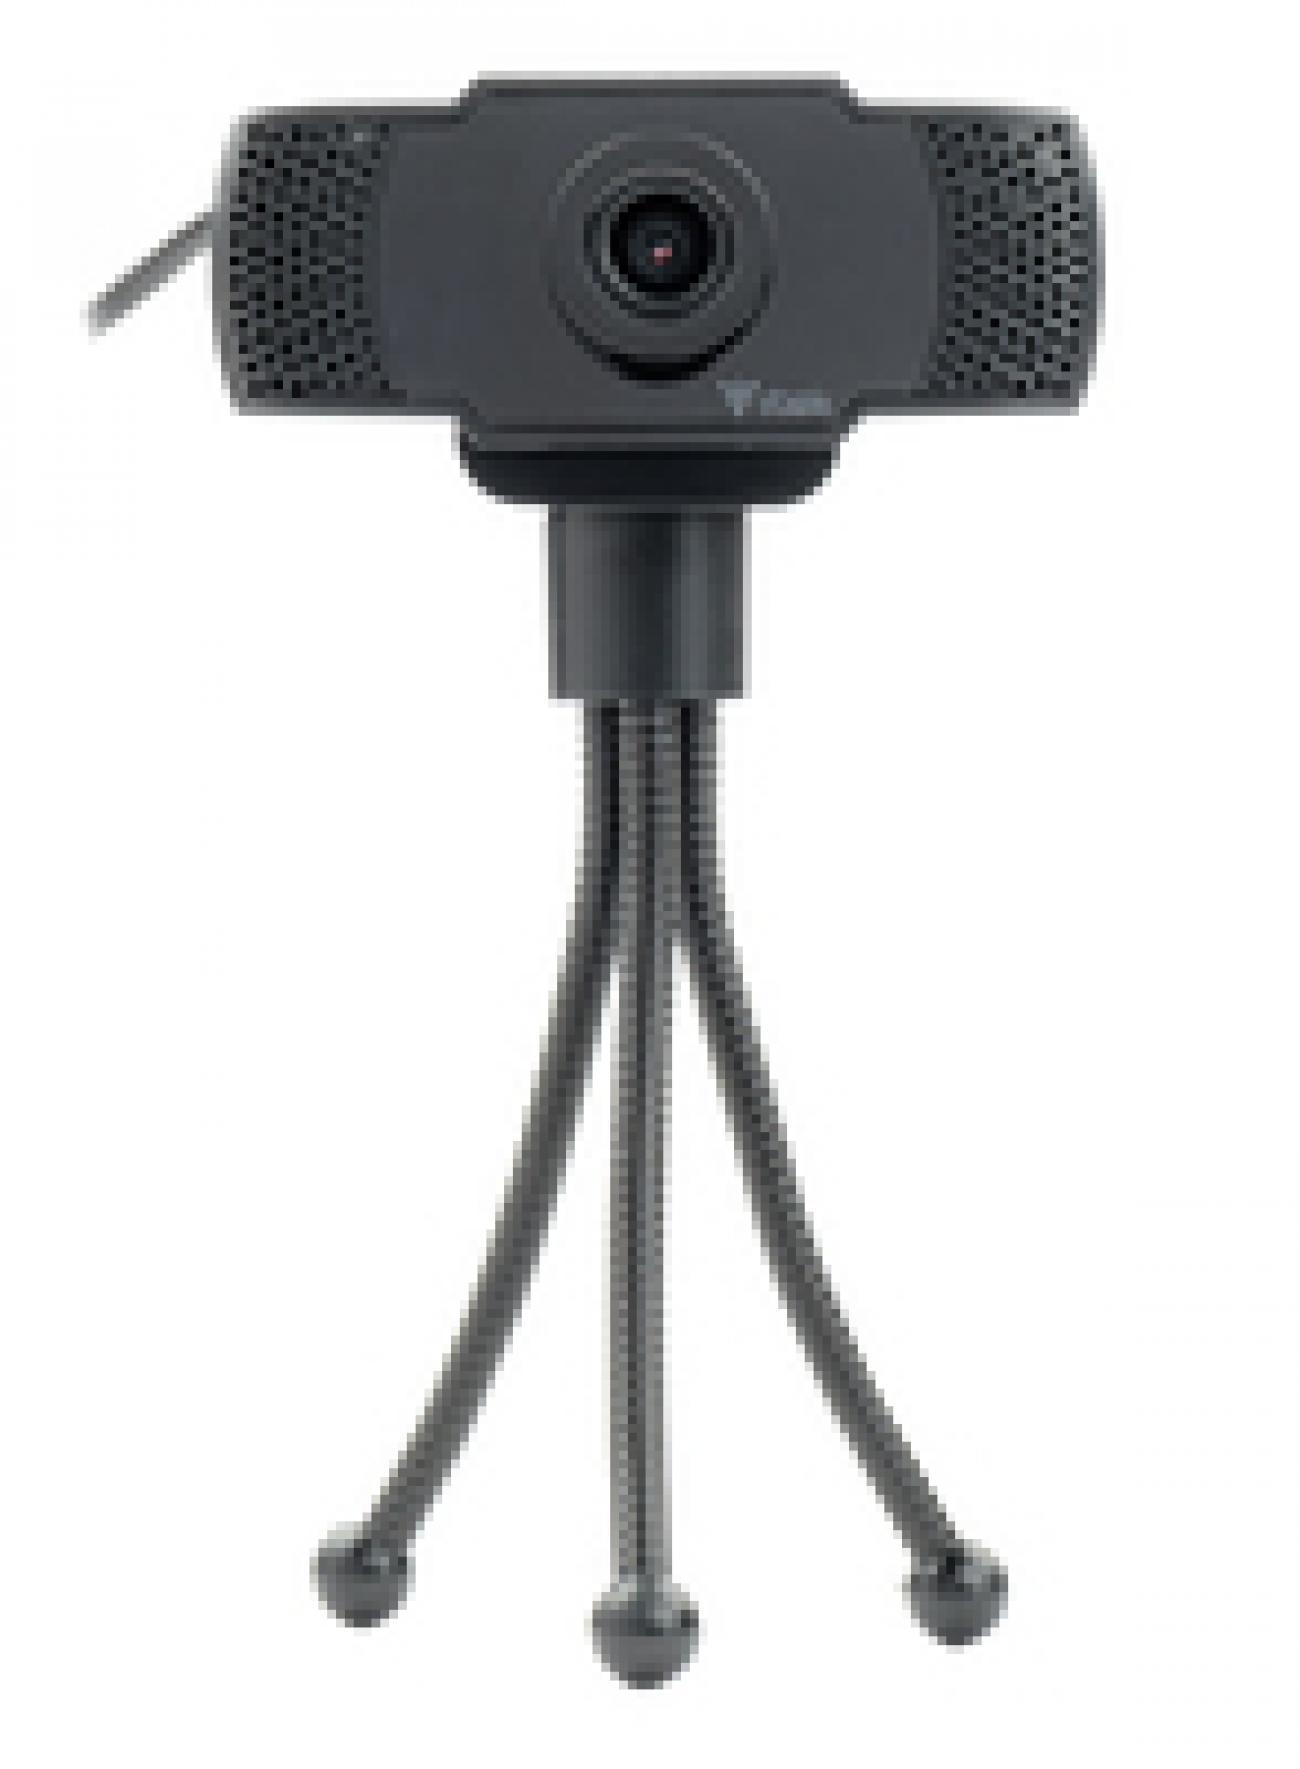 Webcam con Microfono W300 - Full HD, 30FPS, USB, treppiede